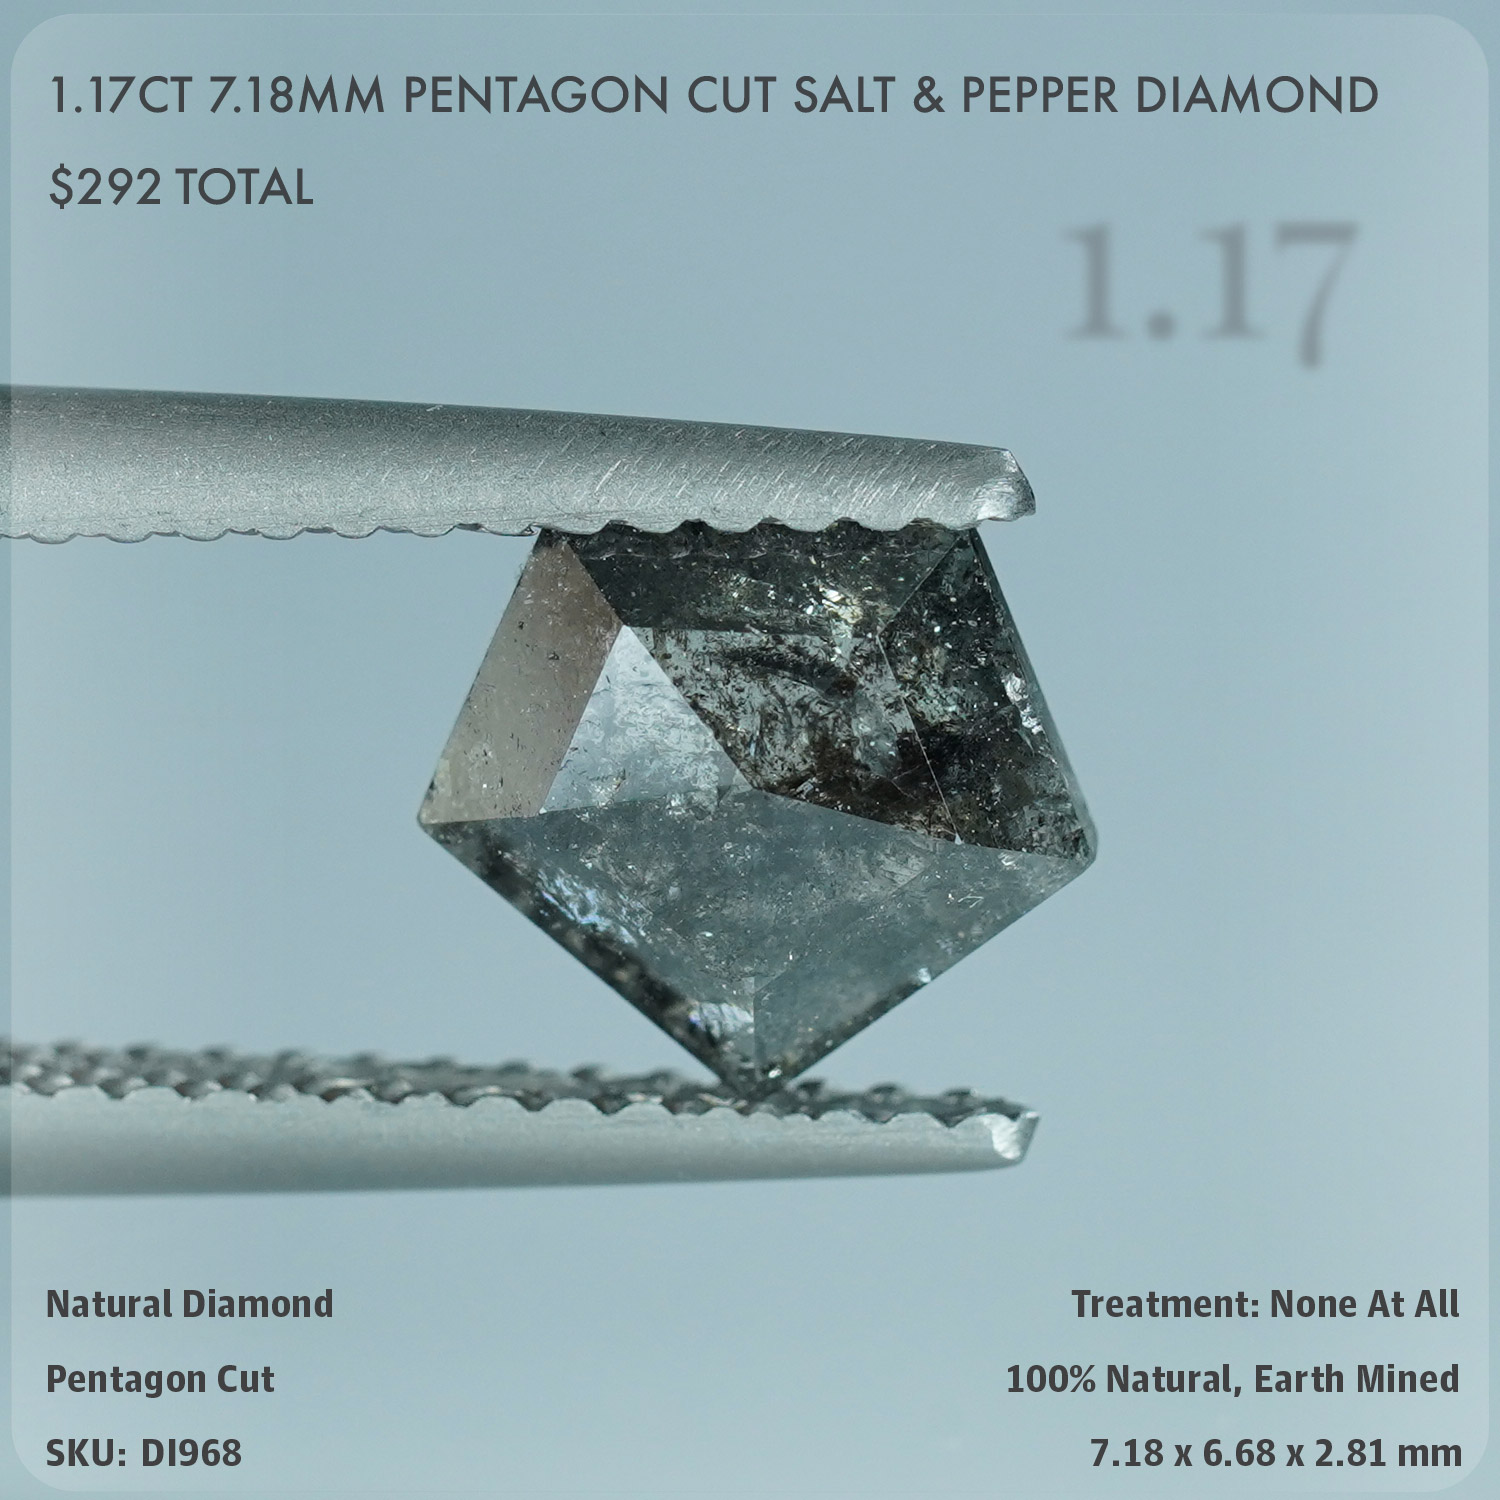 1.17CT 7.18mm Pentagon Cut Salt & Pepper Diamond